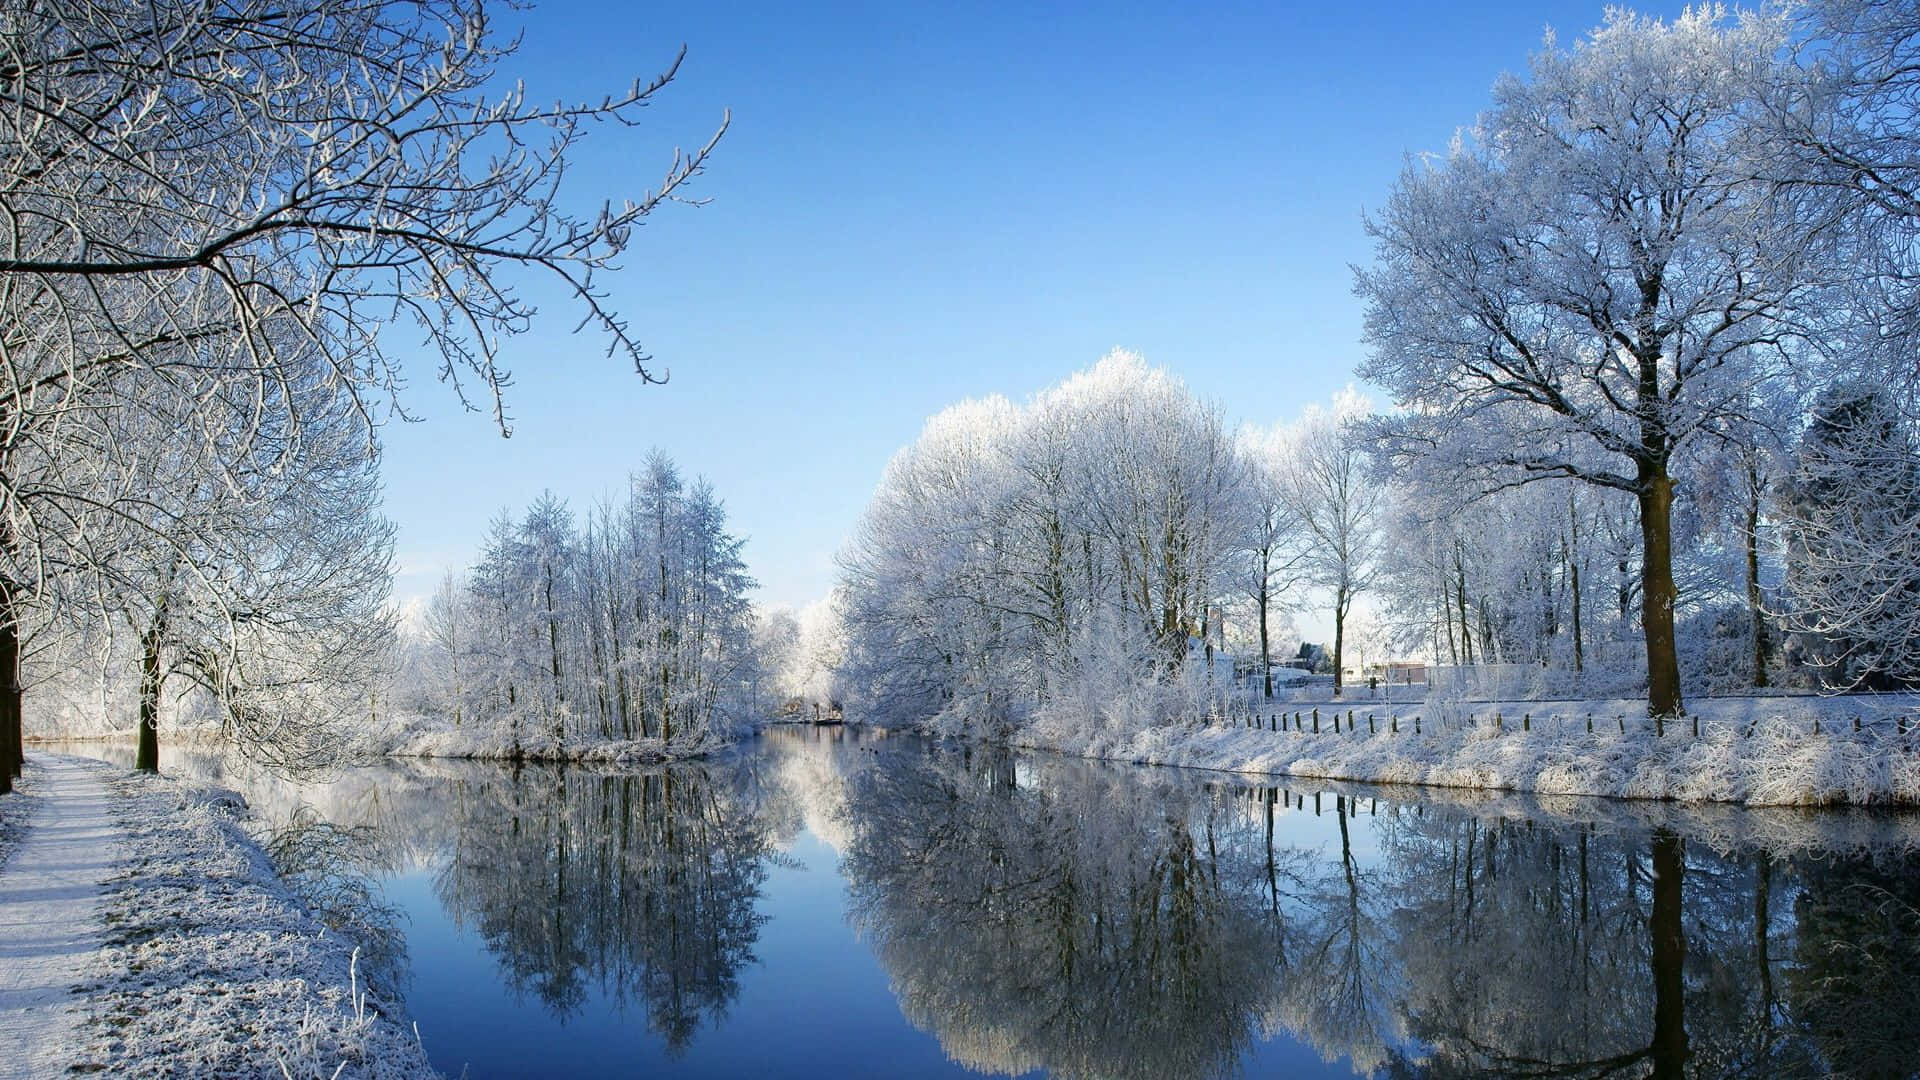 Enjoy The Beautiful Winter Scene